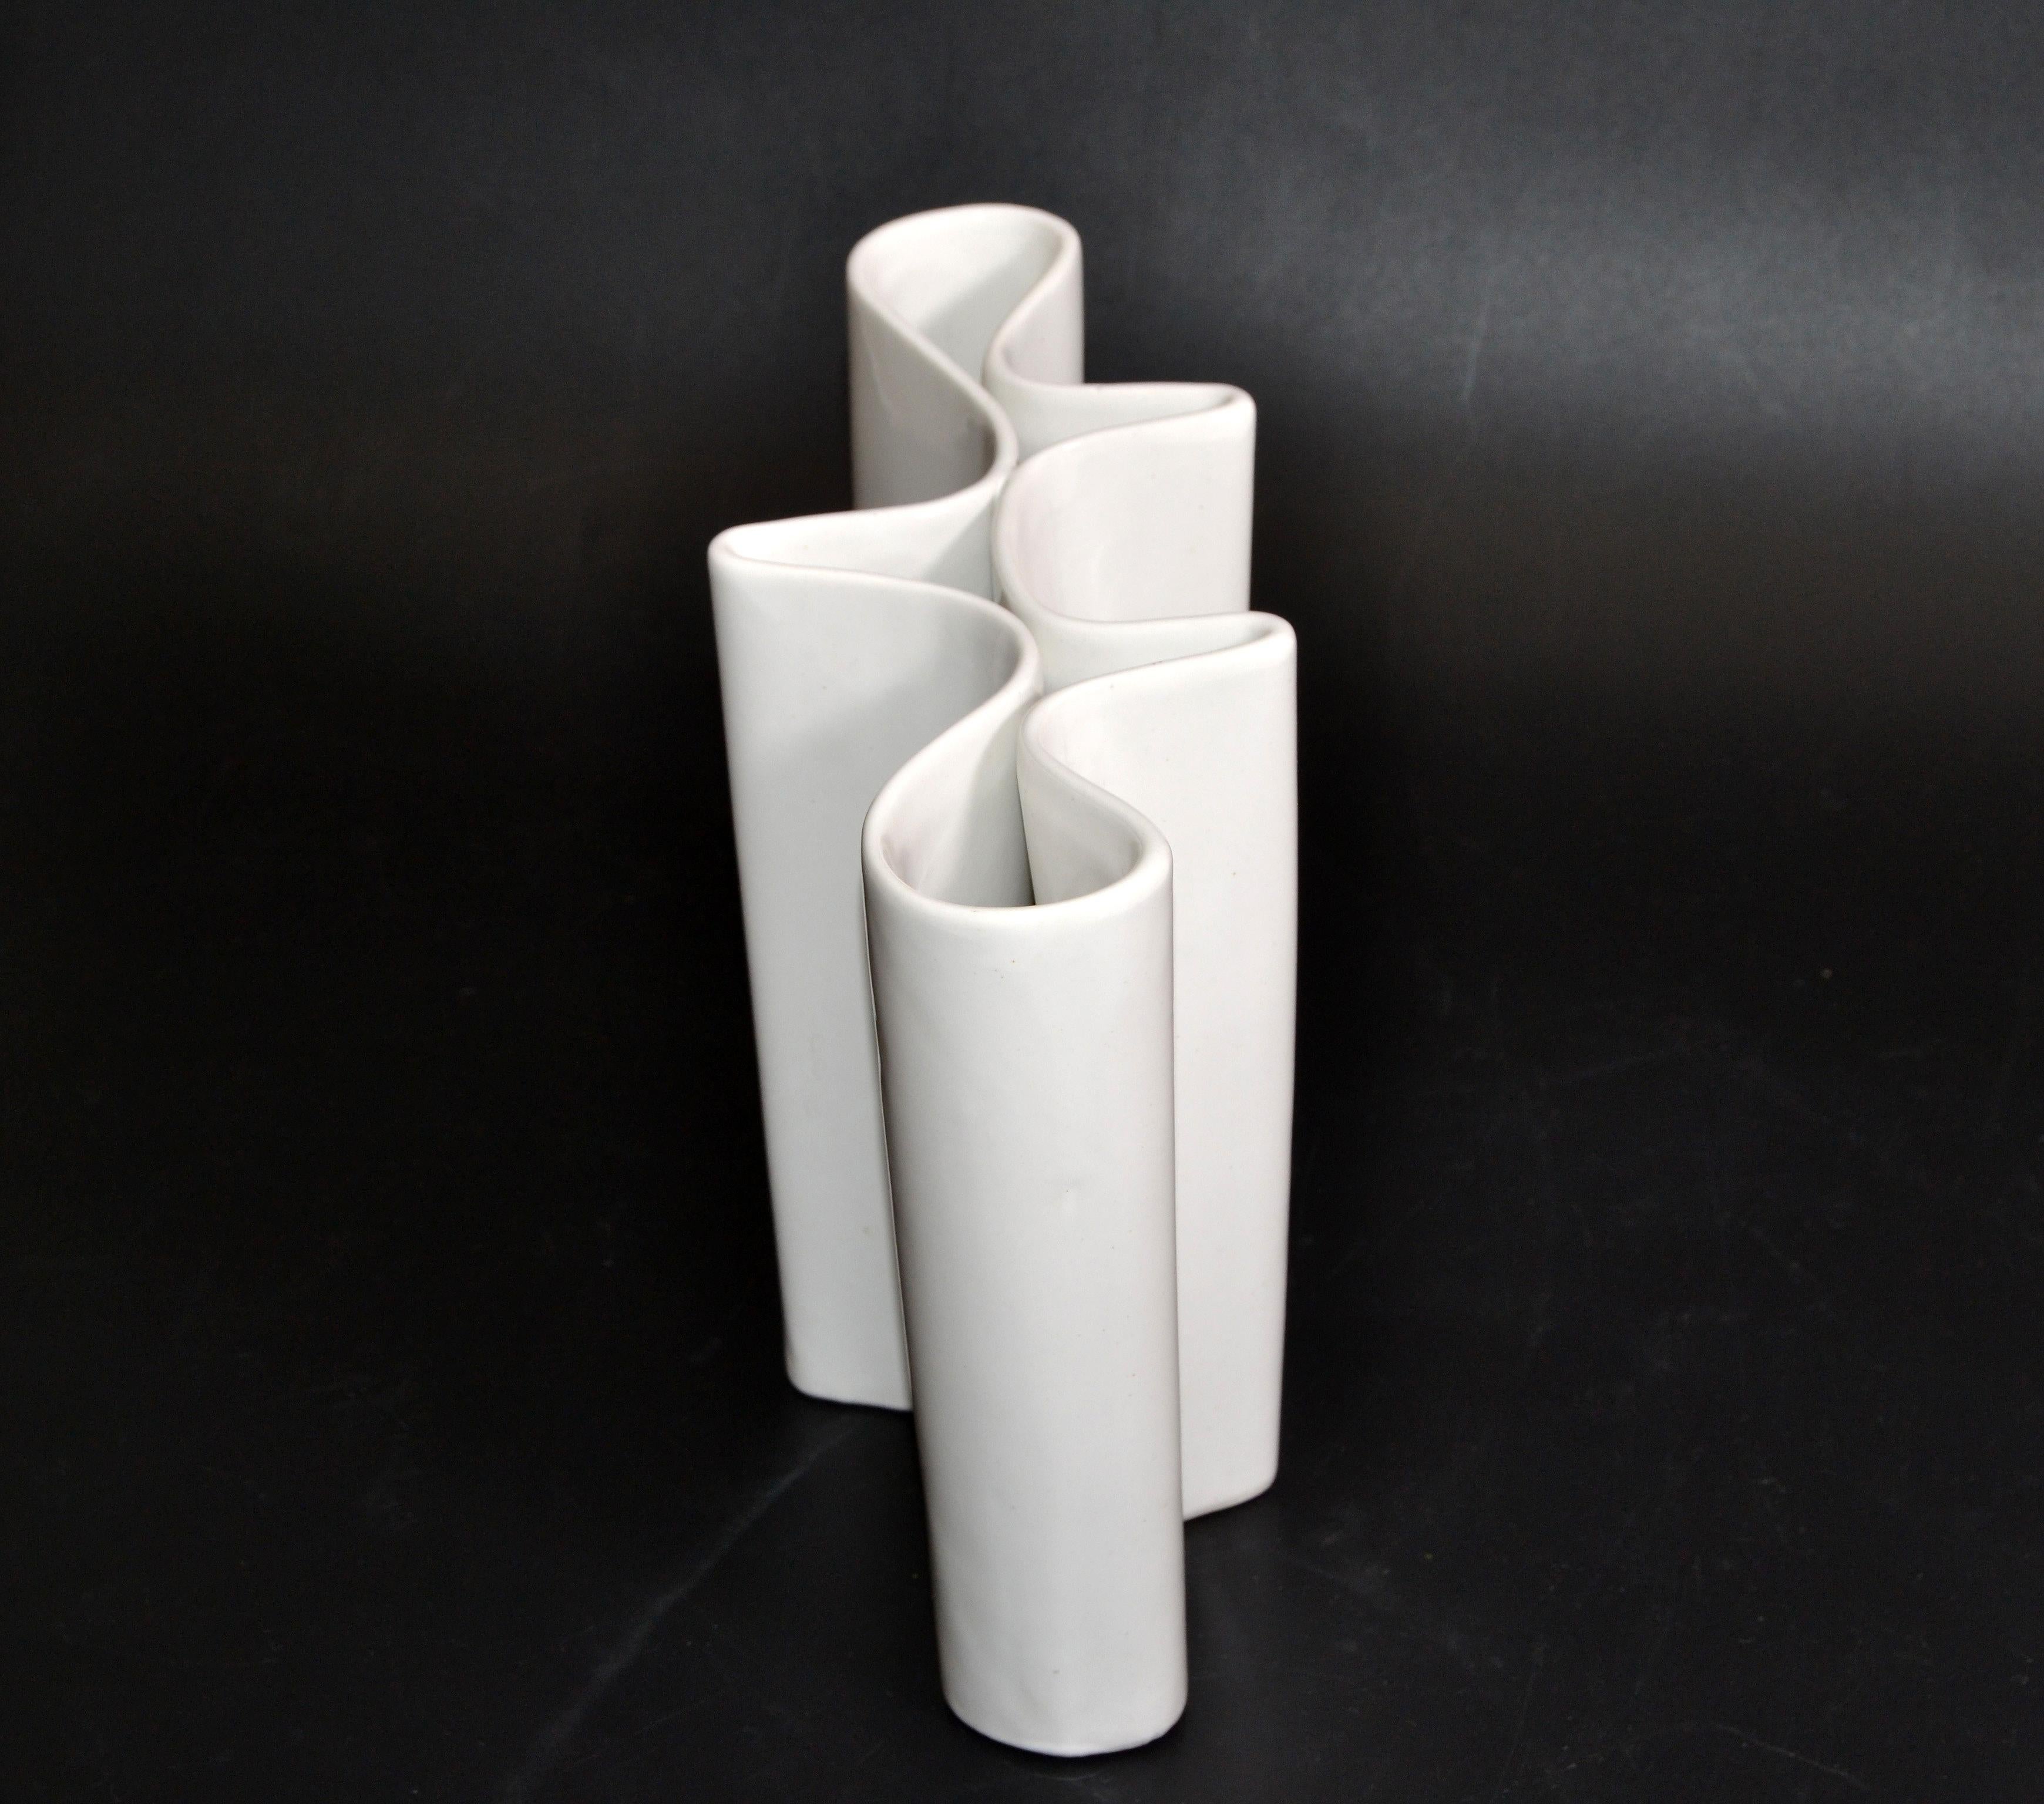 Late 20th Century Iittala Style White Glazed Ceramic Sculptural Flower Vase Mid-Century Modern 80s